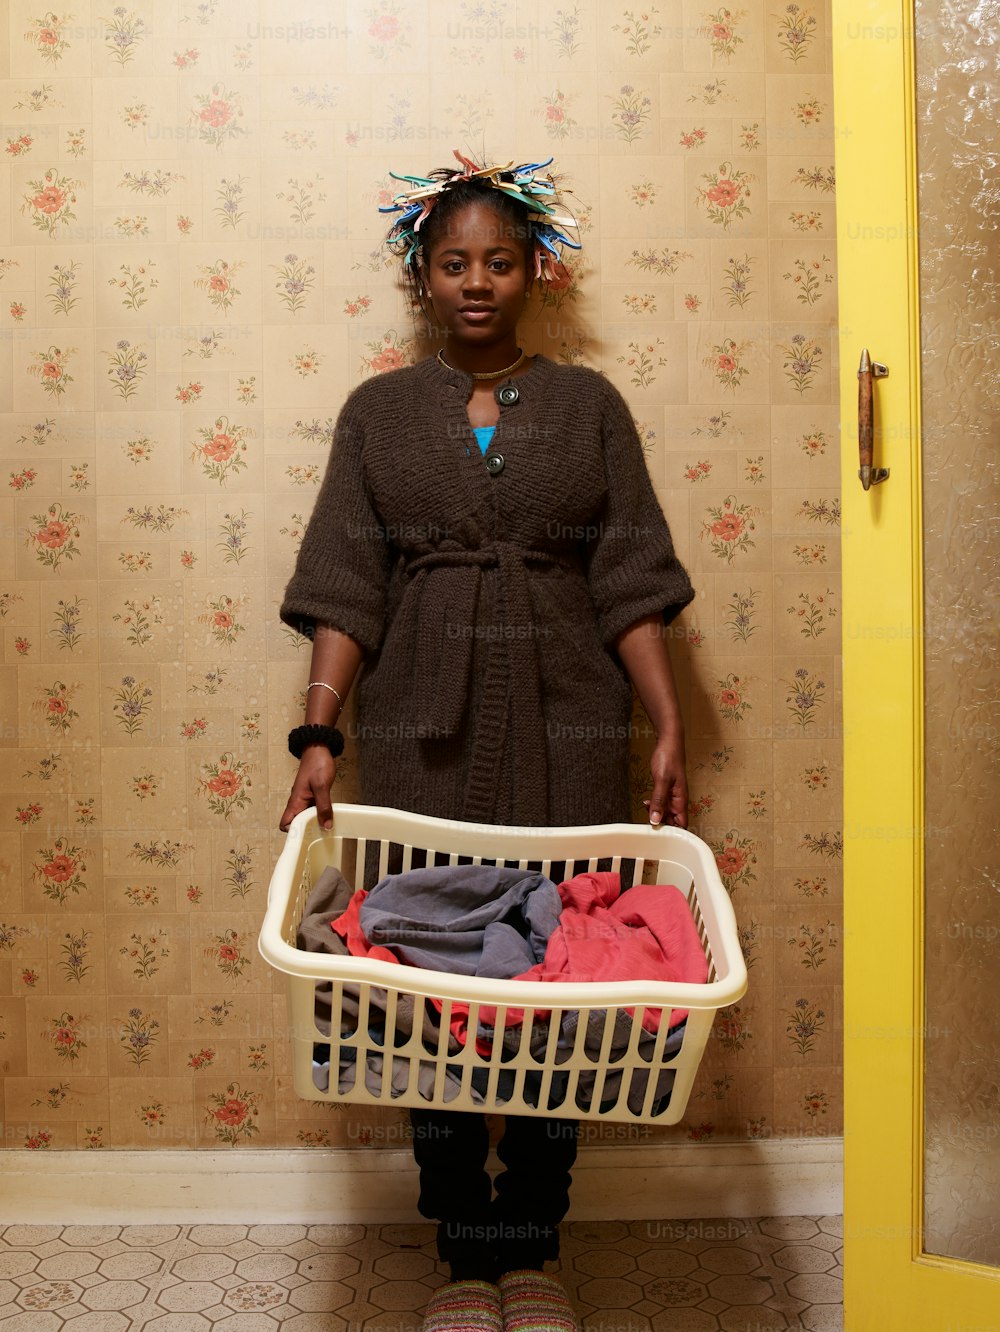 Laundry Basket Pictures  Download Free Images on Unsplash